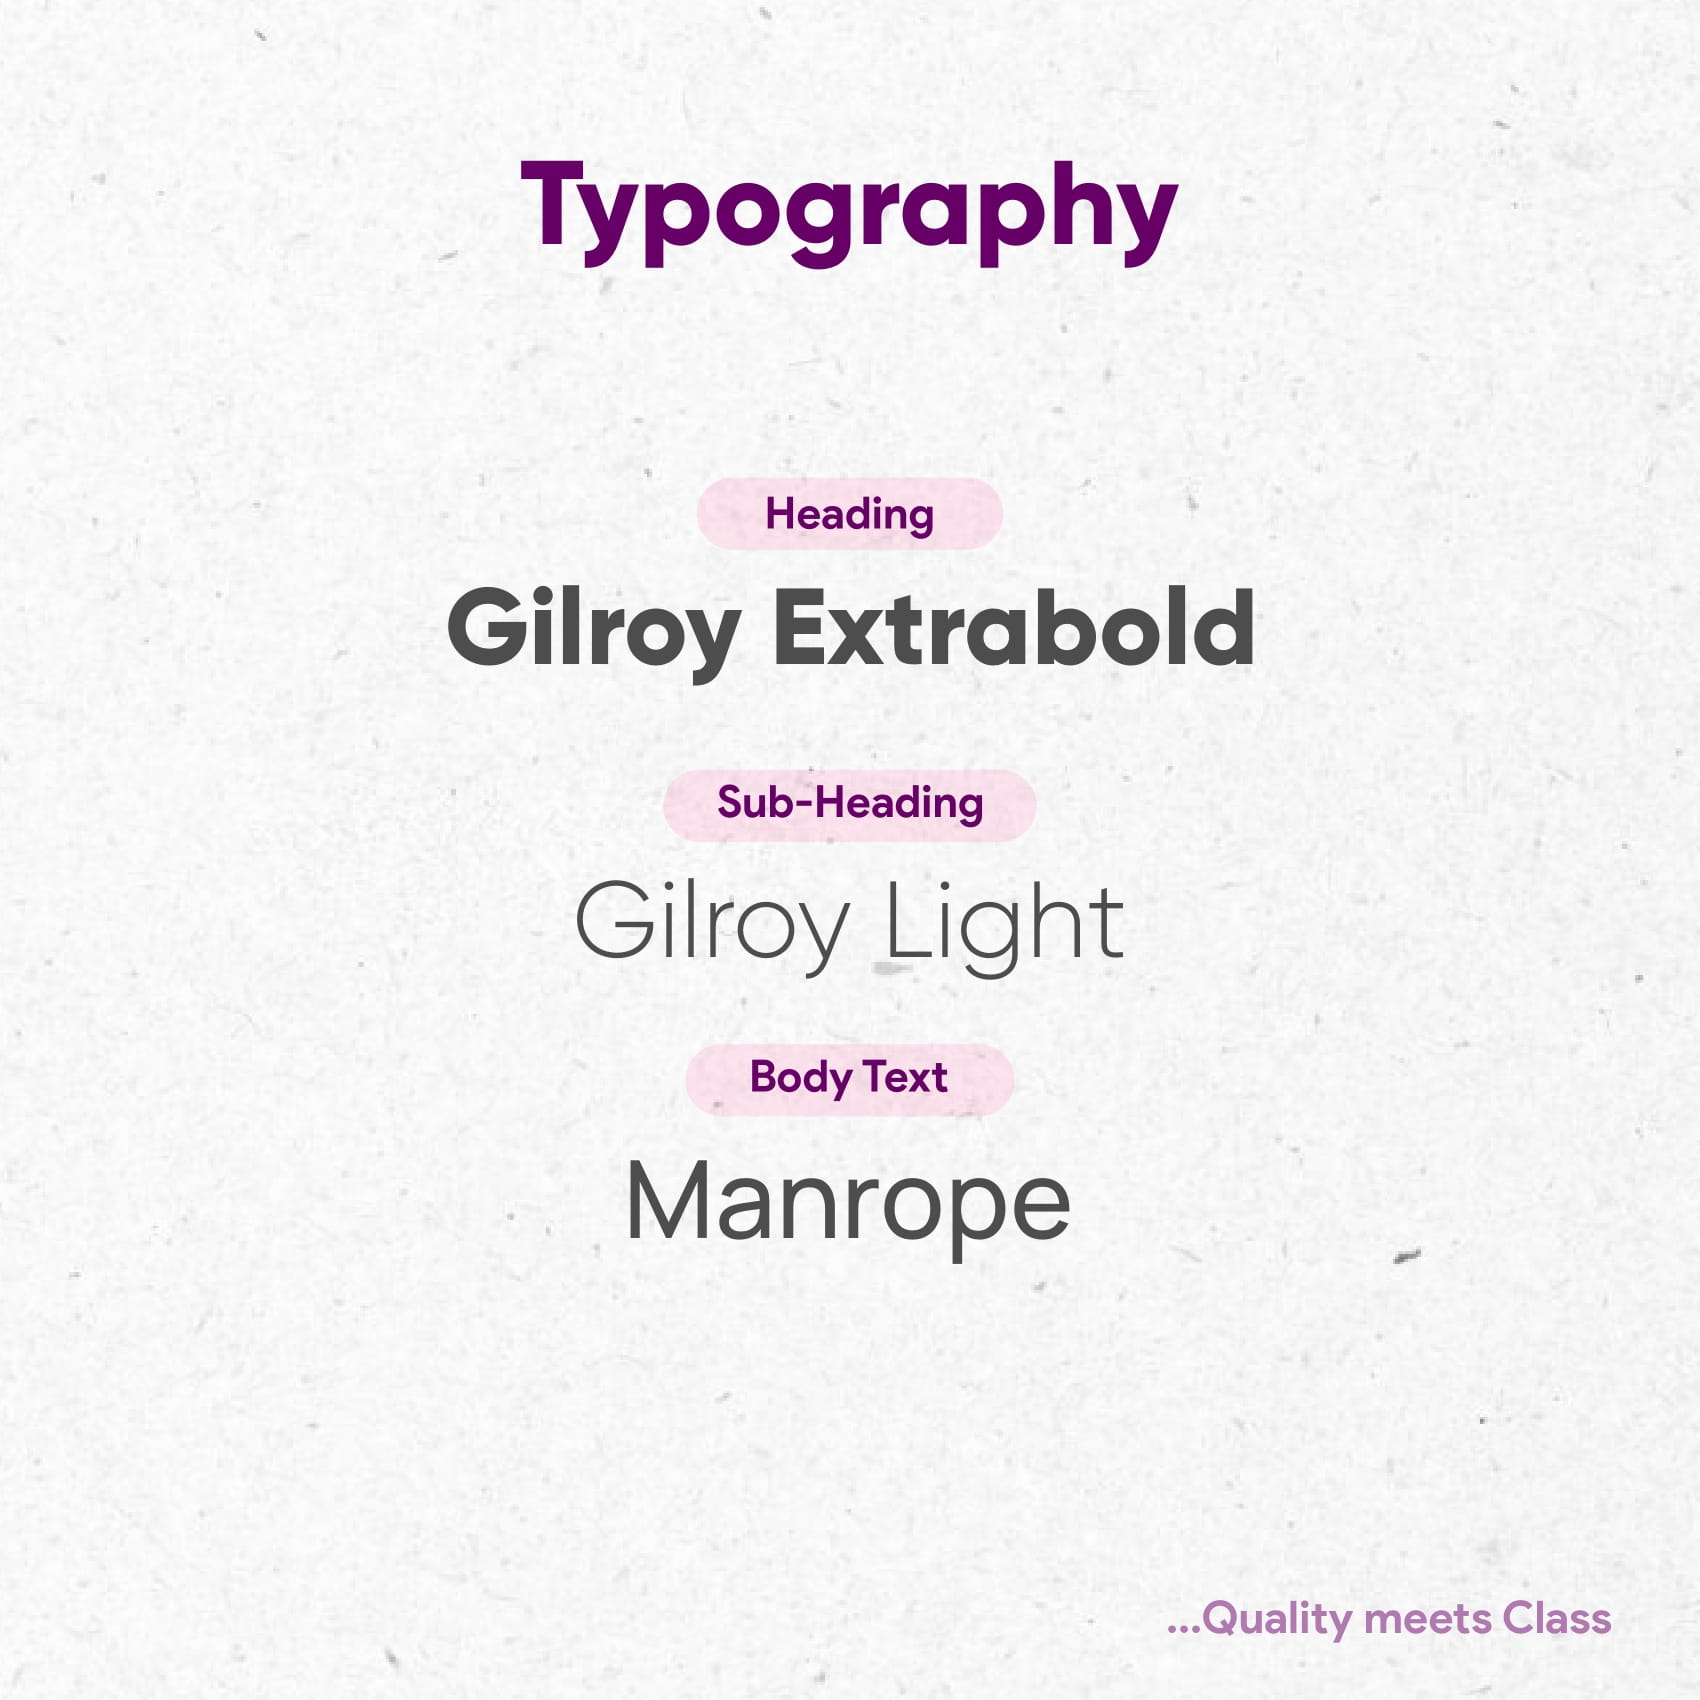 Brand Typography